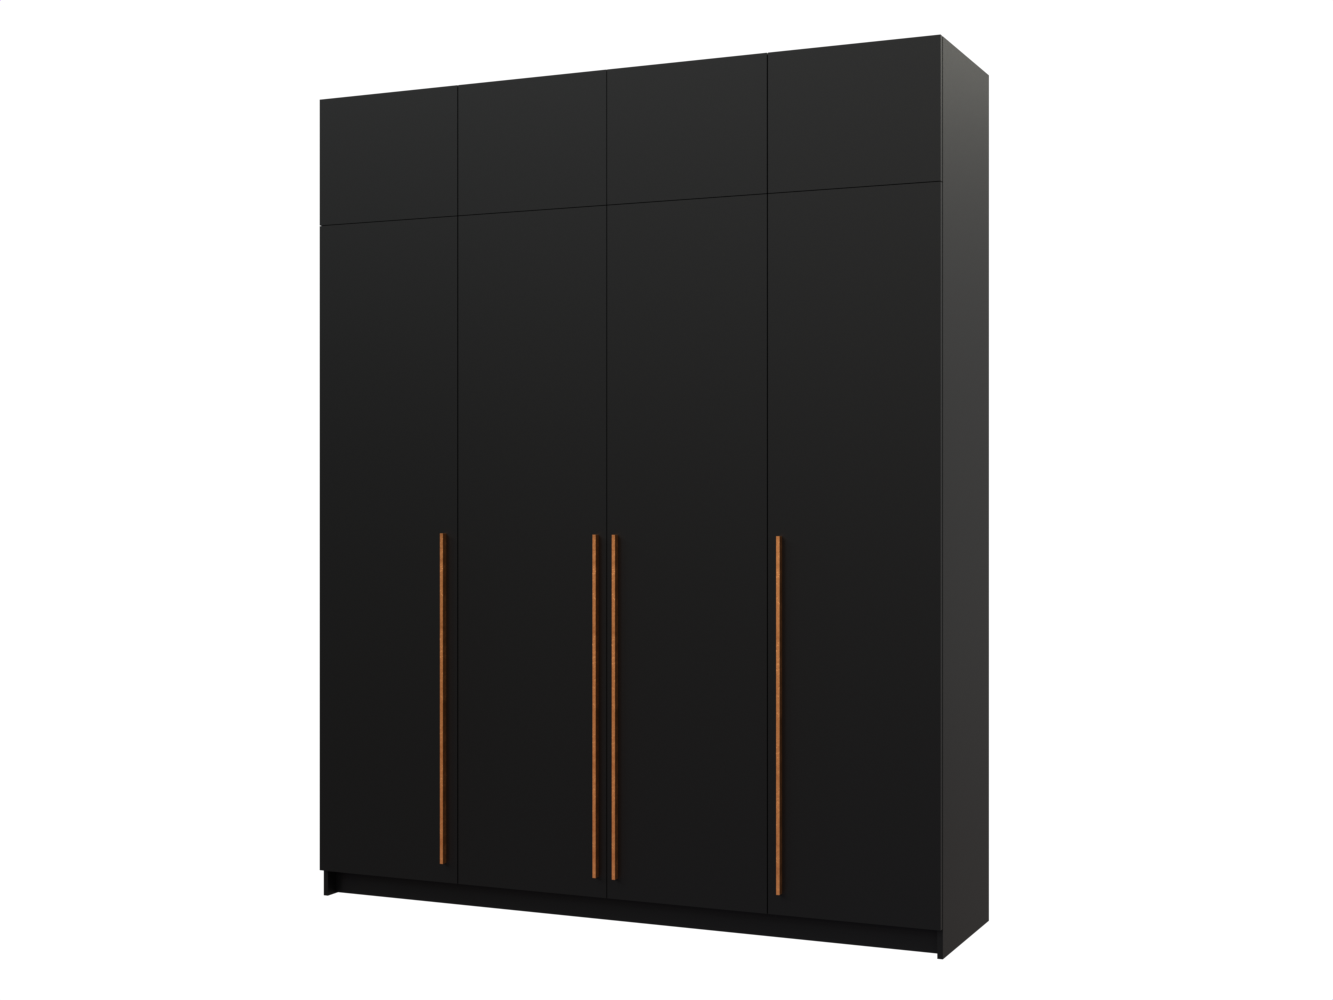 Распашной шкаф Пакс Фардал 47 black ИКЕА (IKEA) изображение товара